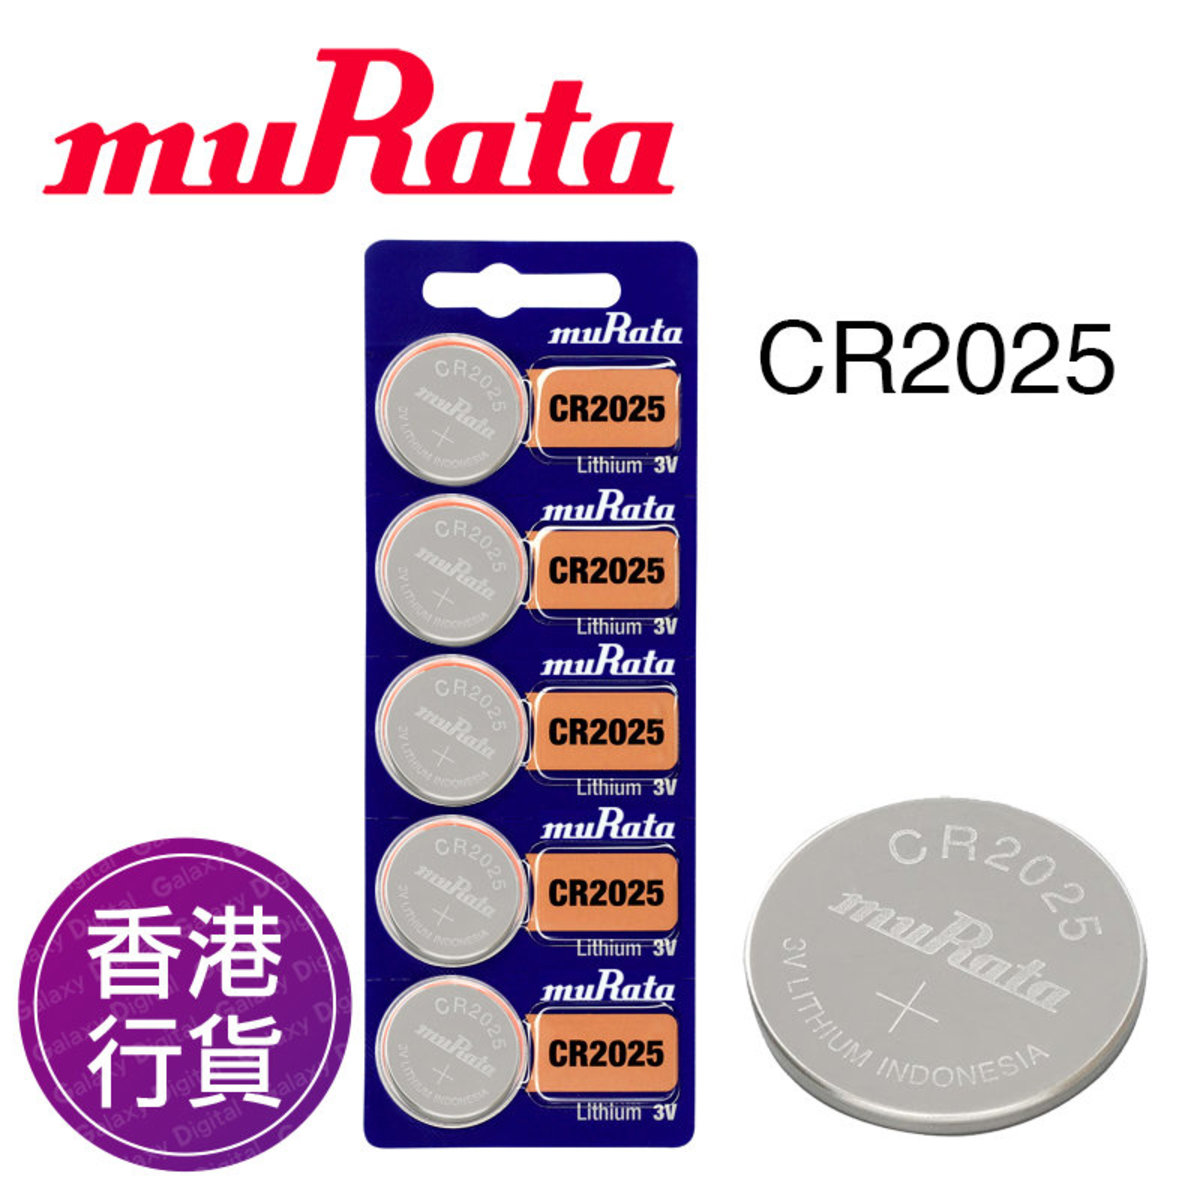 CR2025 Murata Electronics